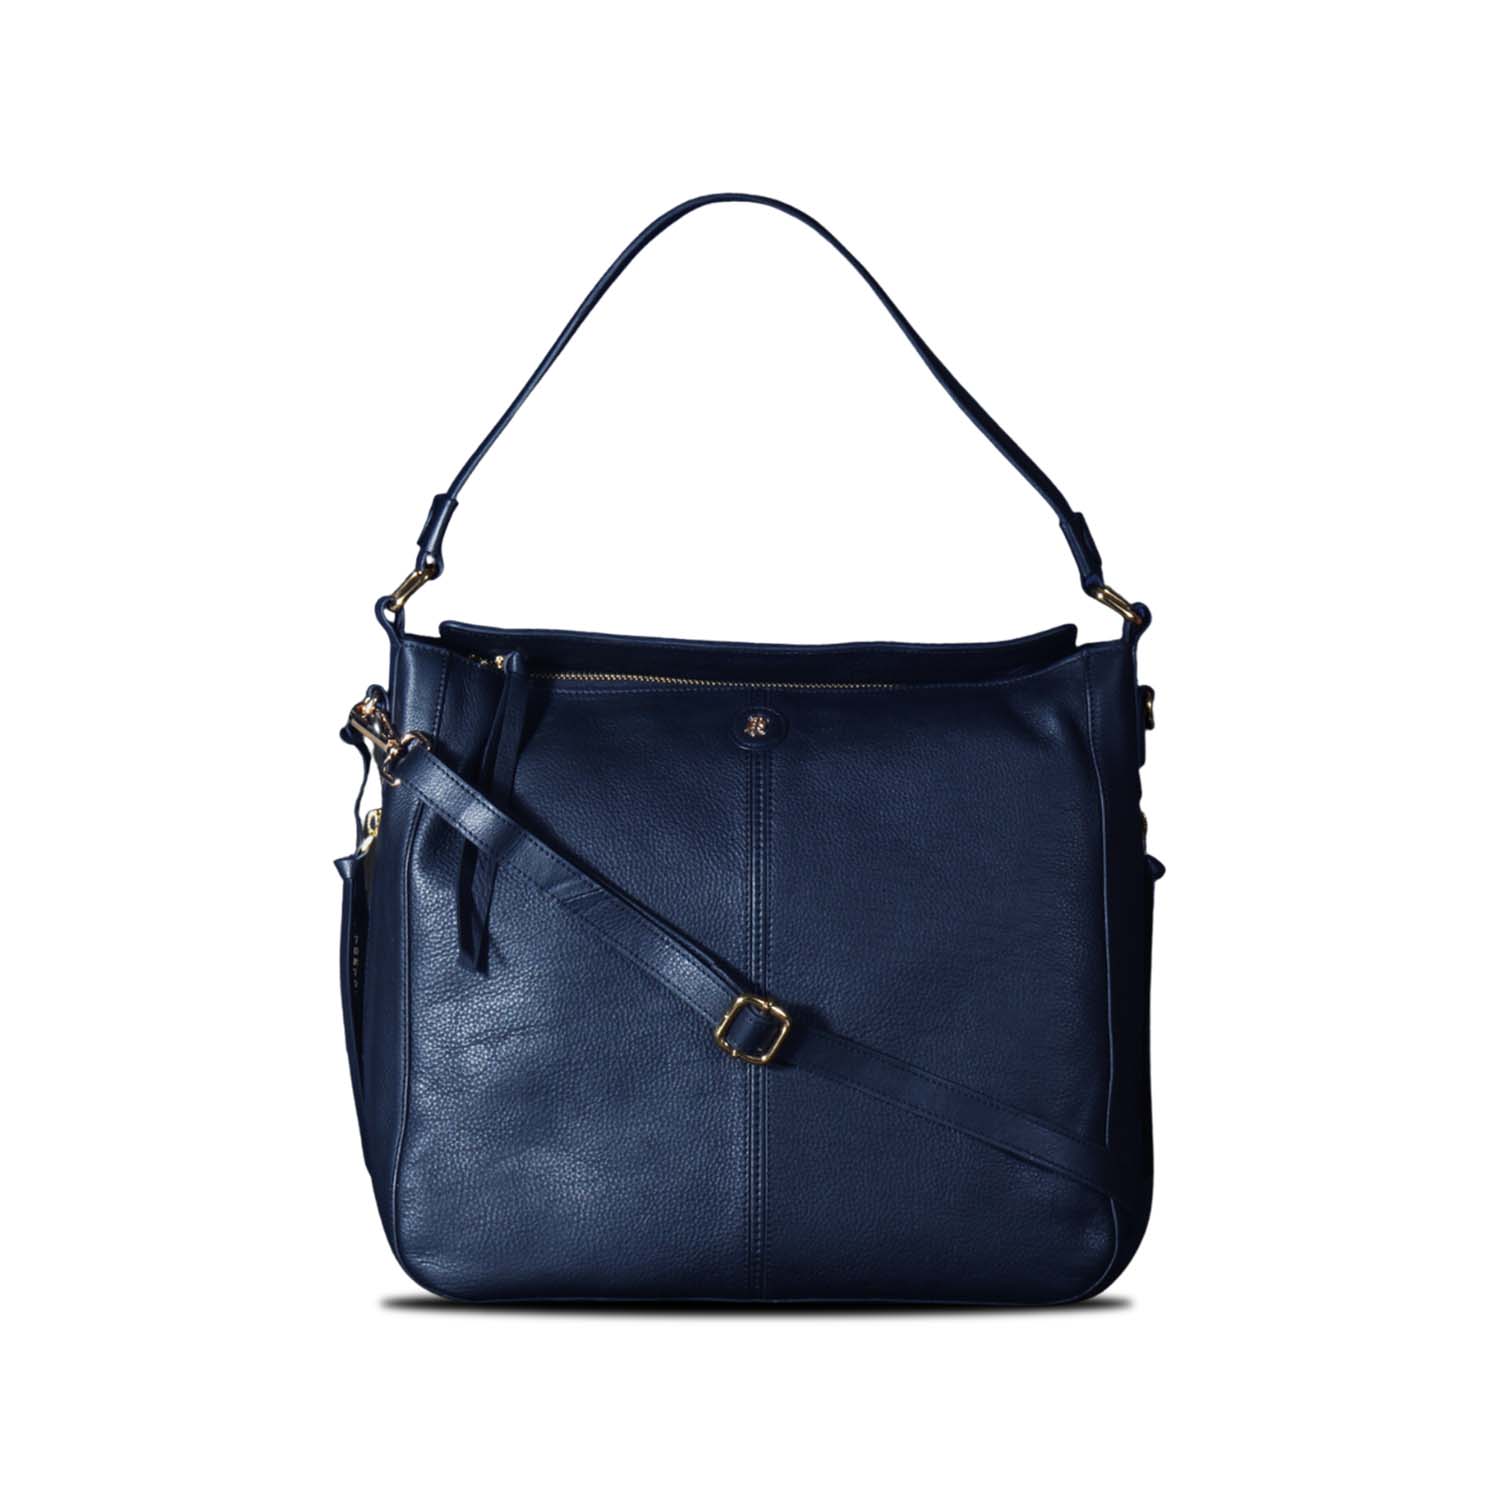 Ivanna - The Handbag/Sling Bag - Dark Blue - Tortoise  